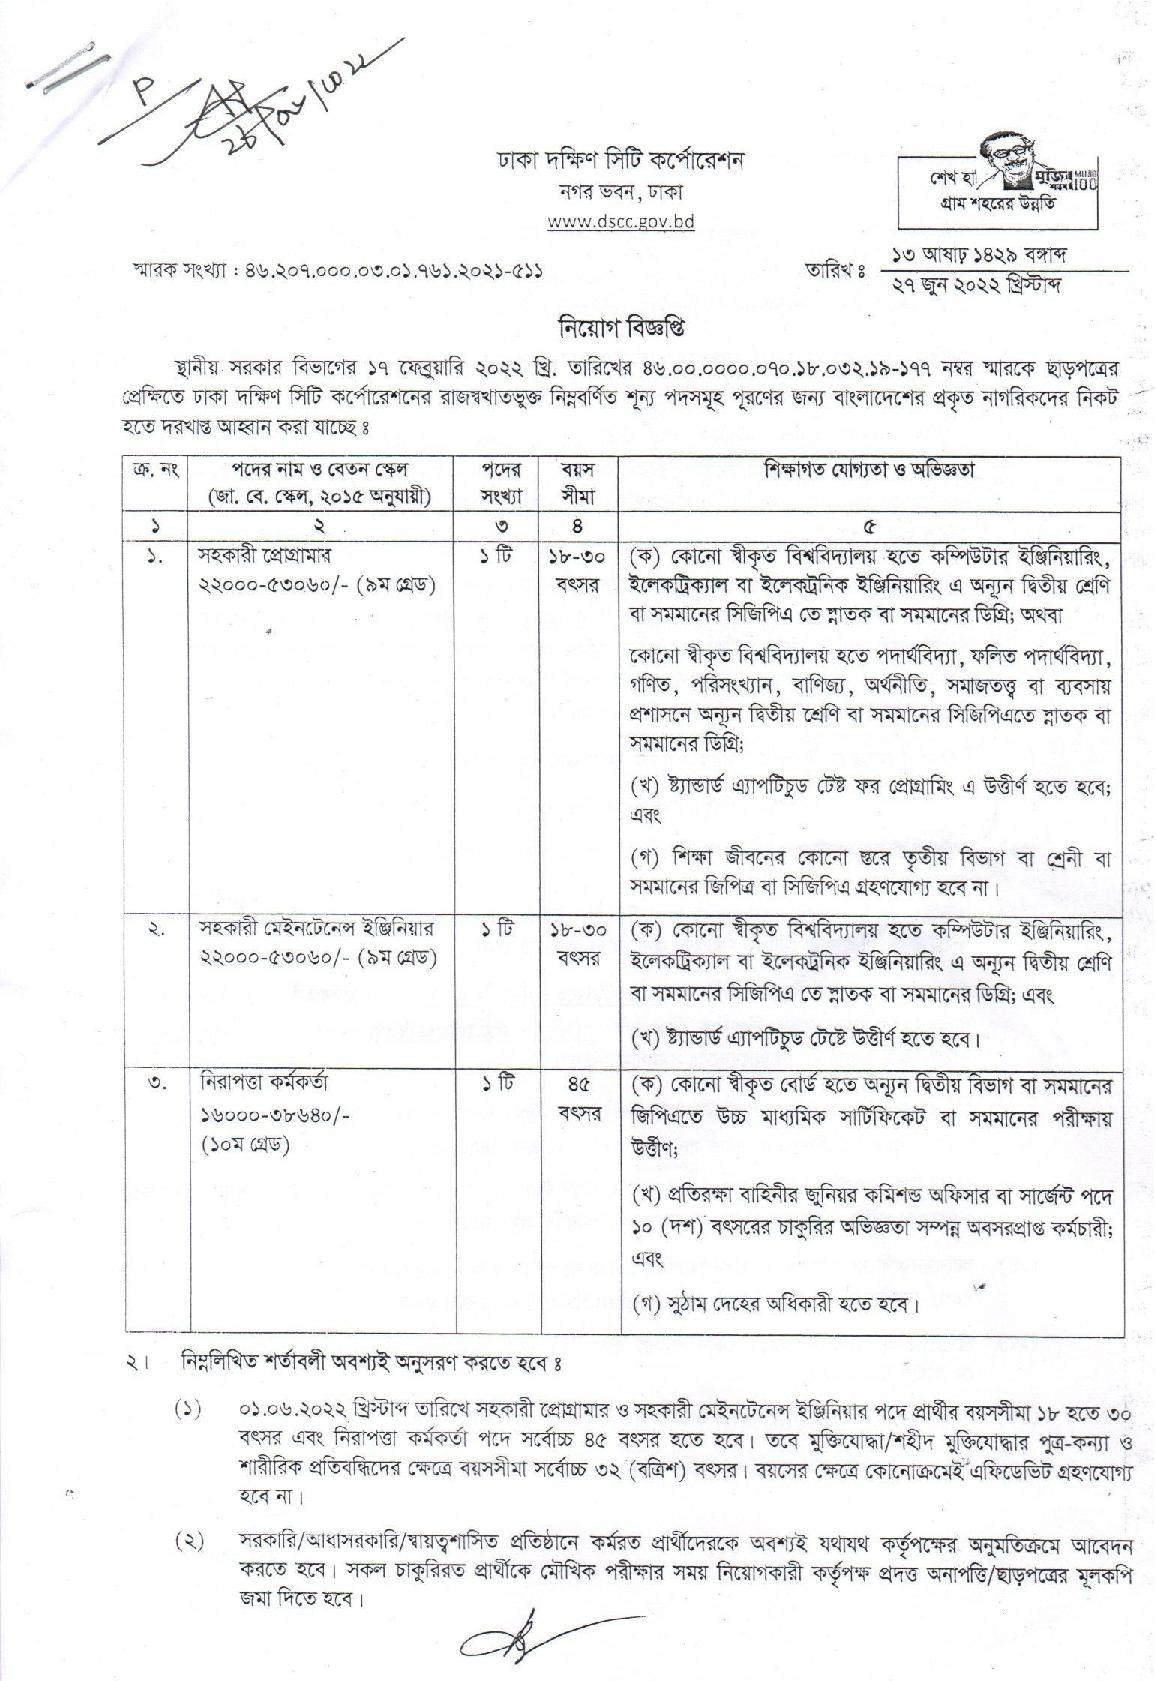 Dhaka South City Corporation Job Circular 2022